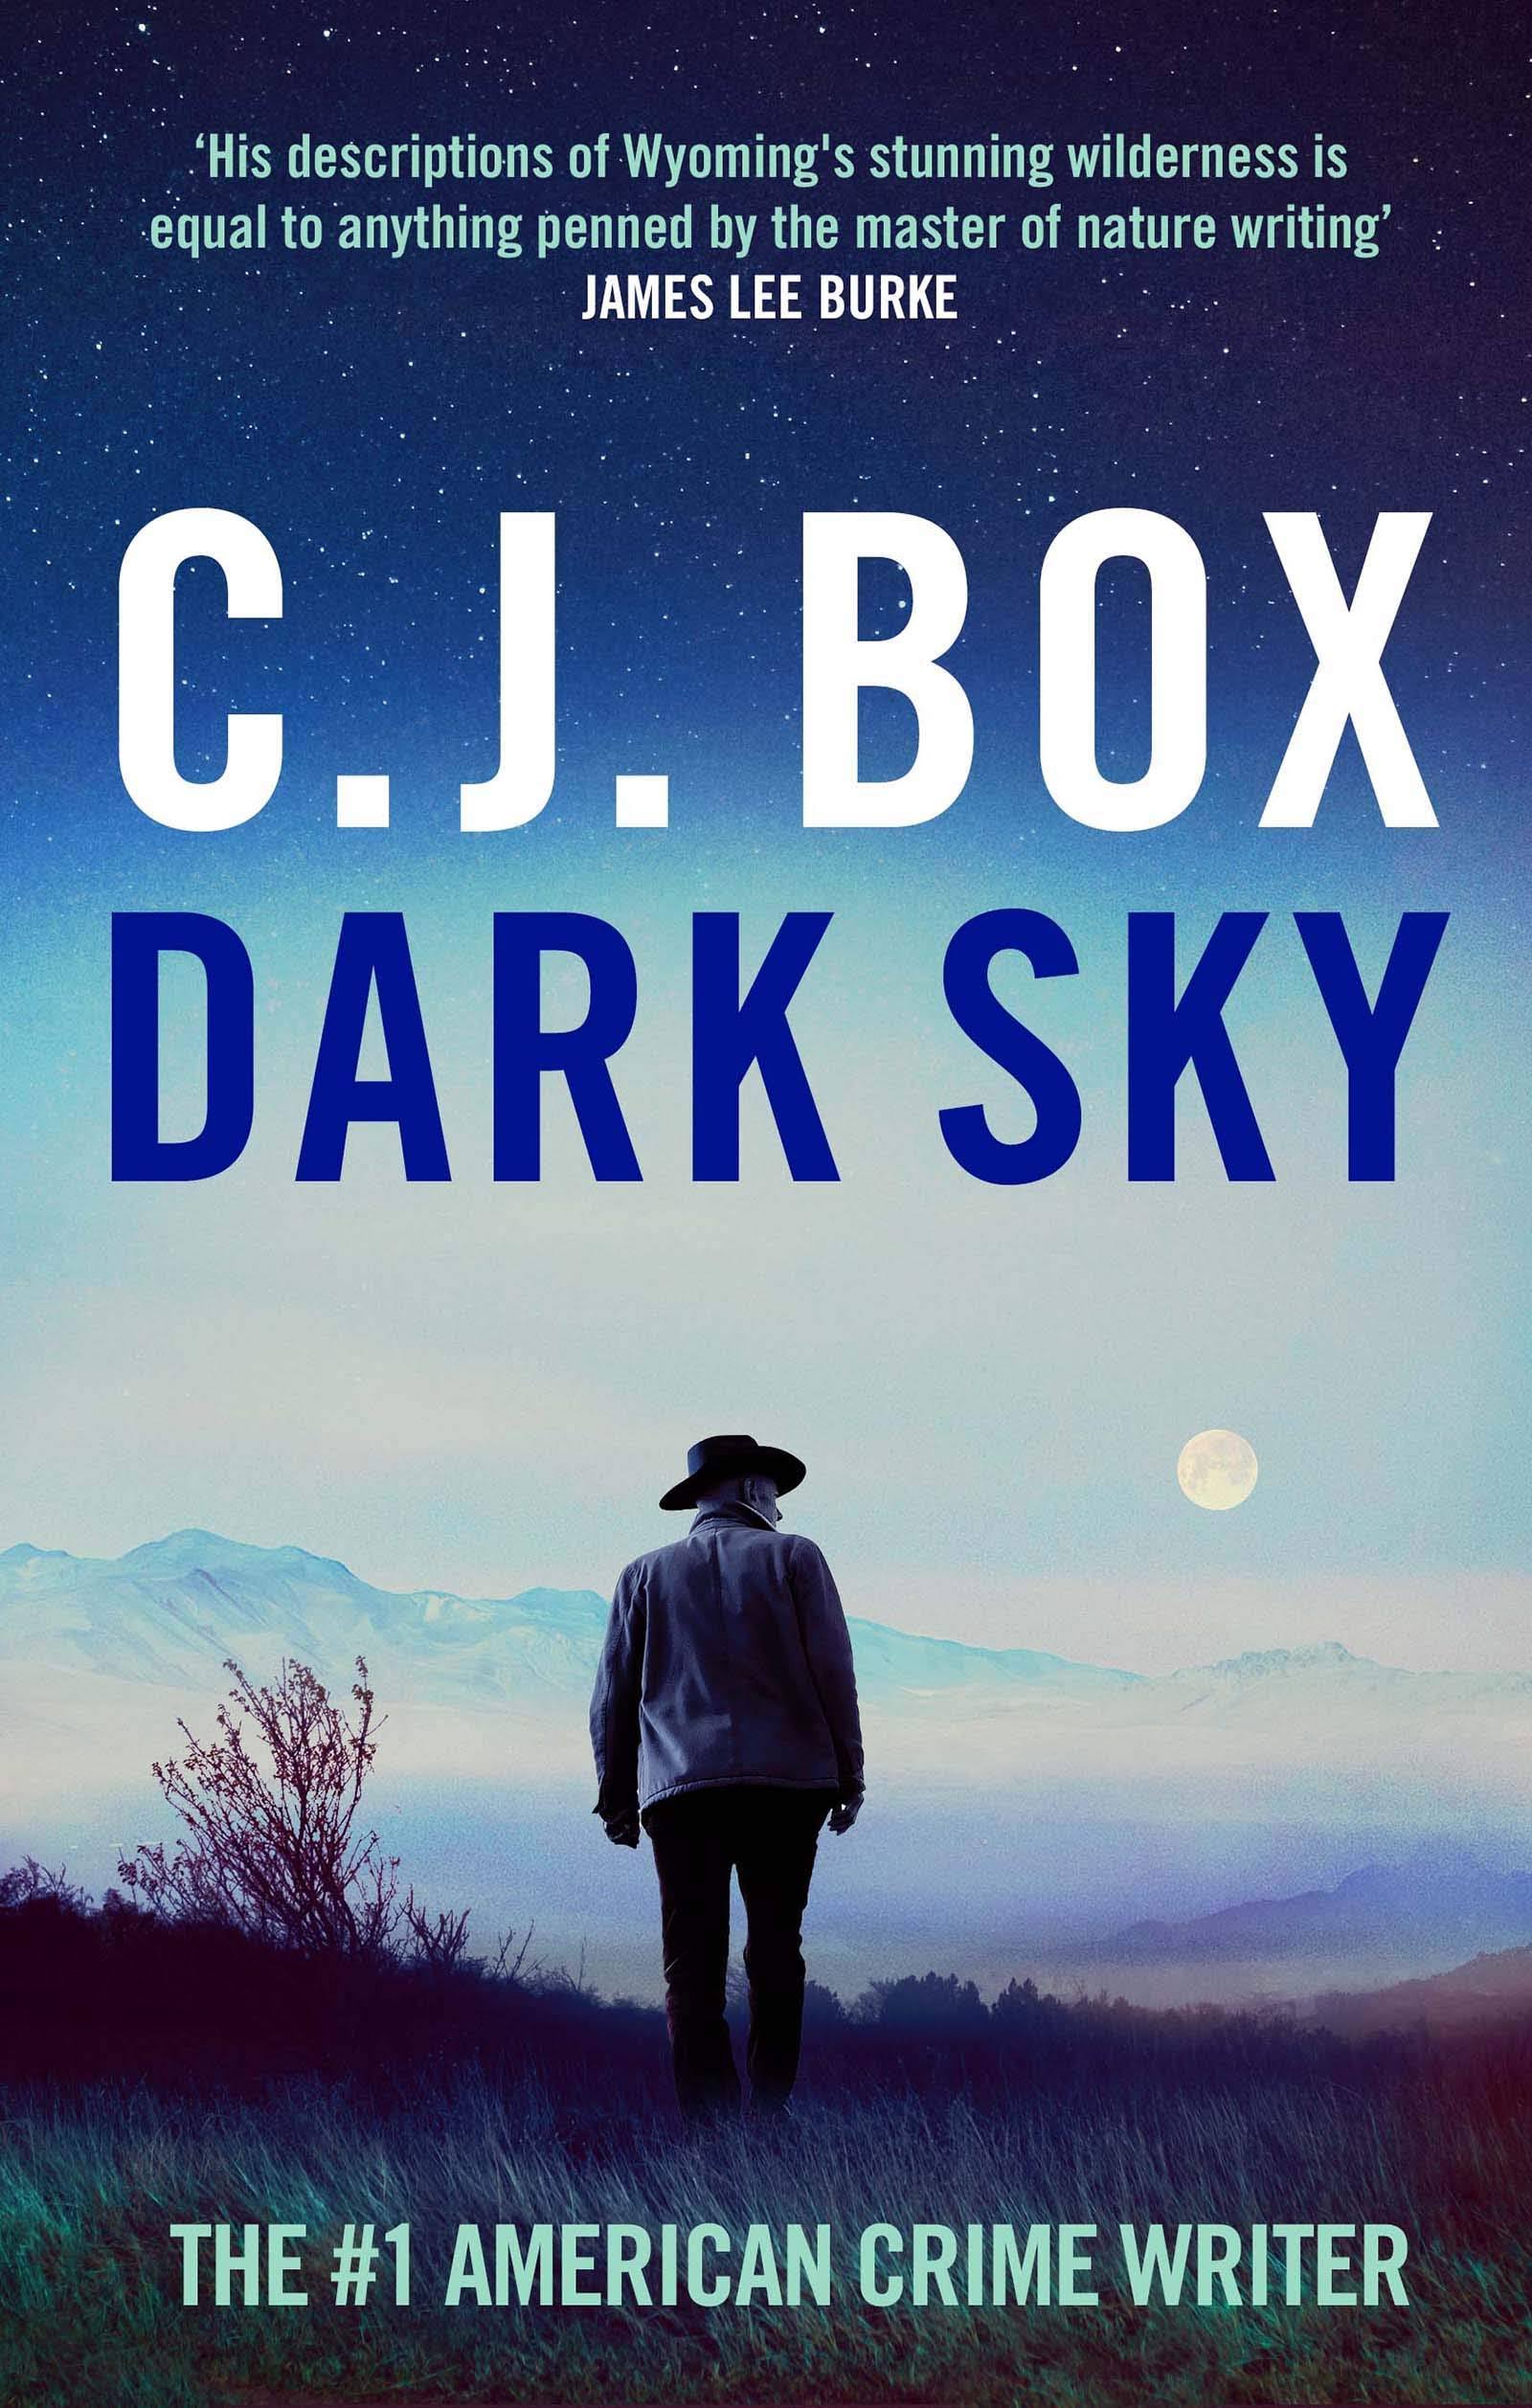 Dark Sky by C.J. Box